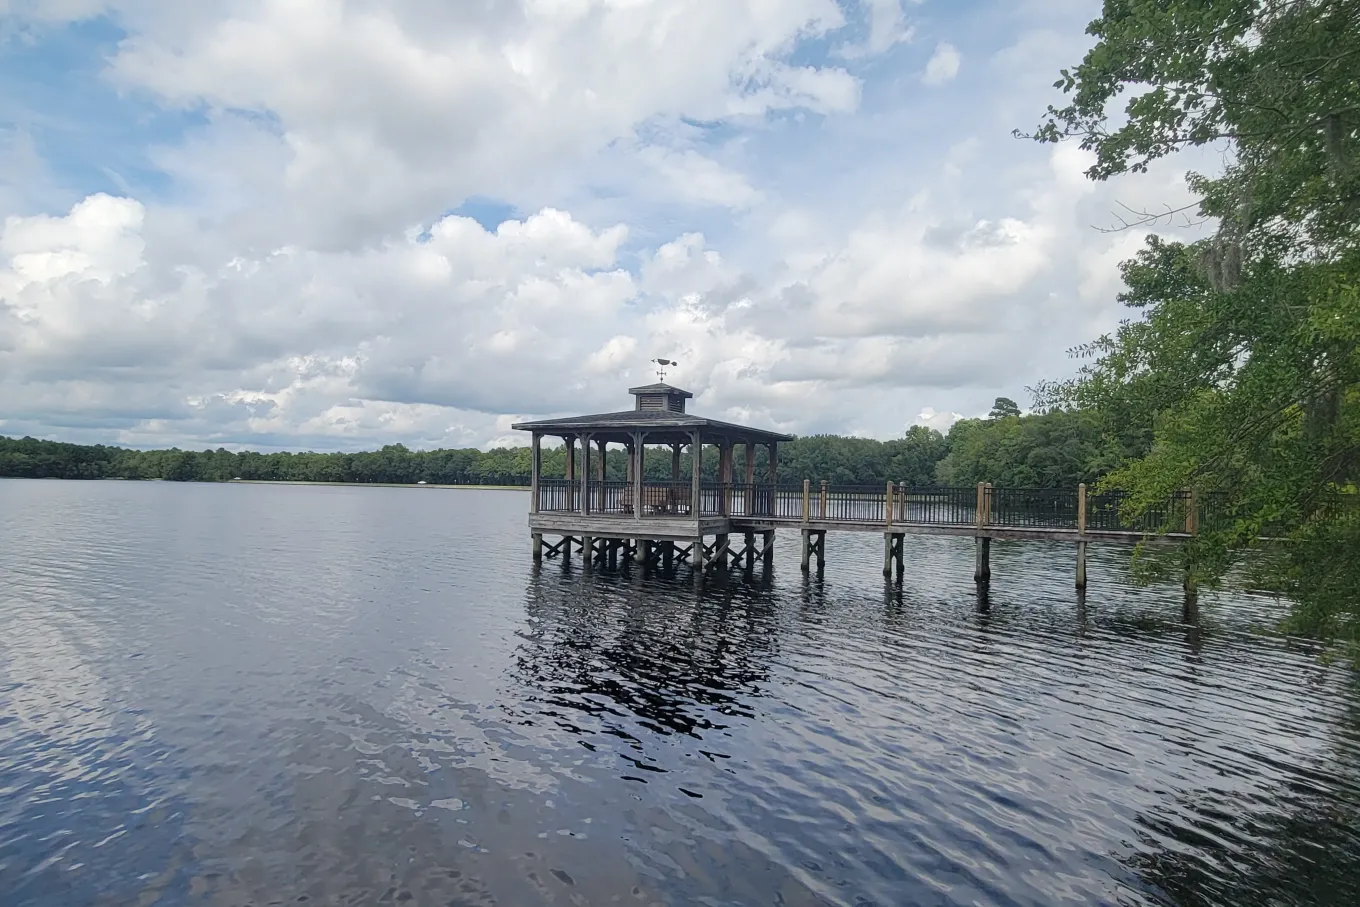 grey dock in a lake